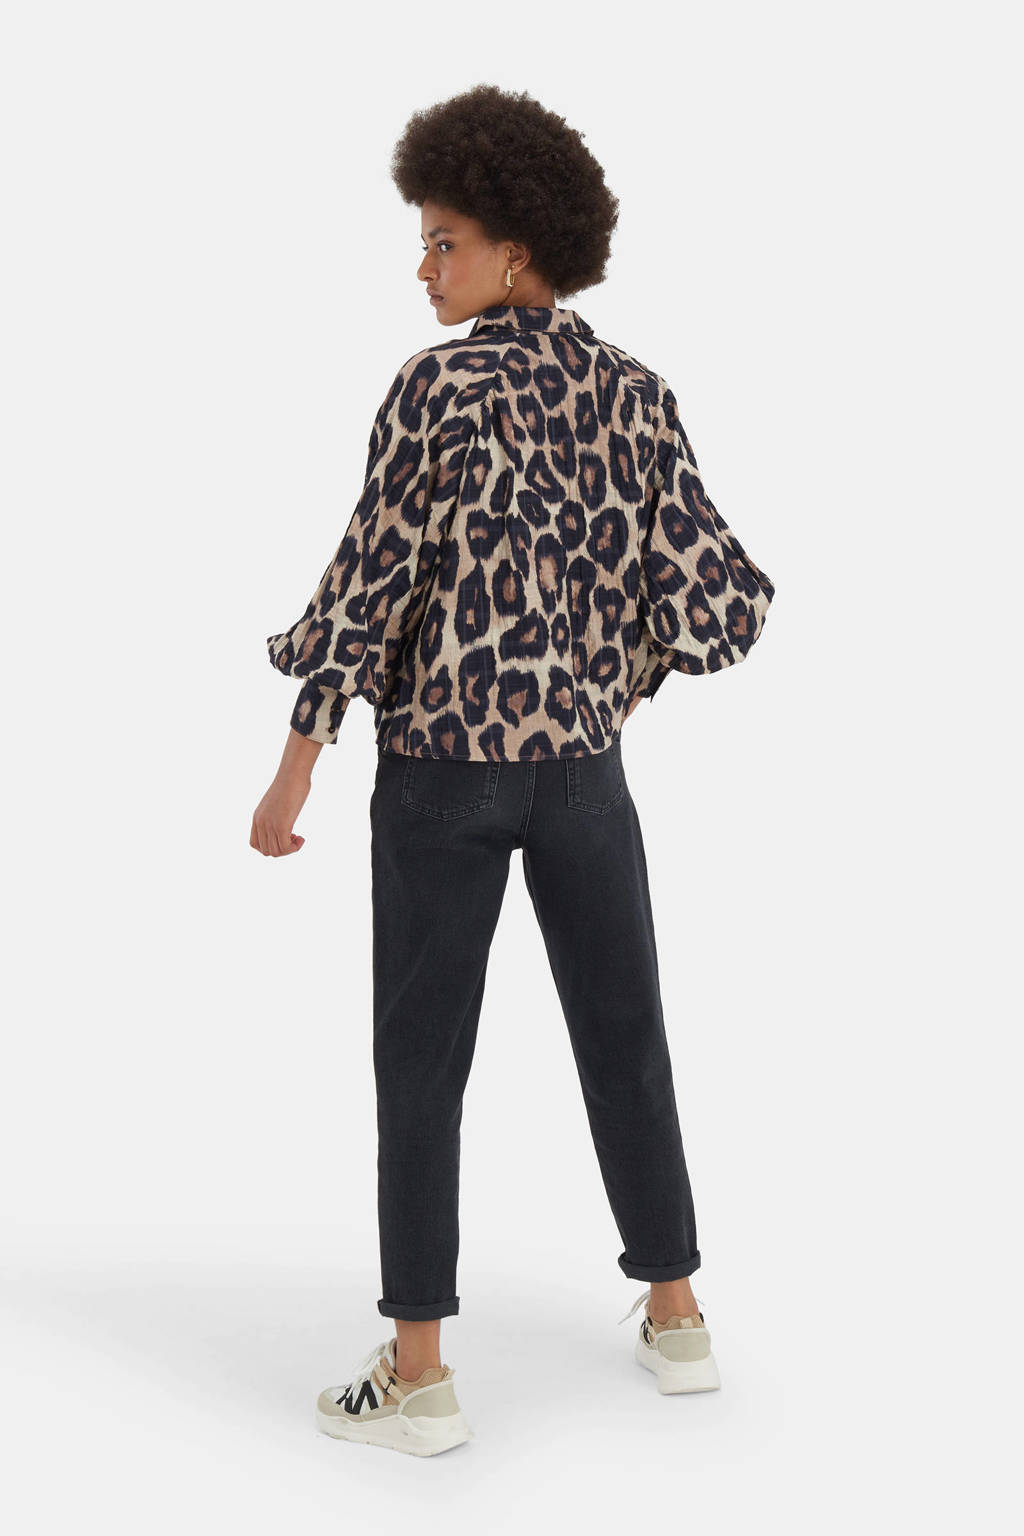 Bruine dames Shoeby Eksept geweven blouse en plooien Leopard van viscose met panterprint, lange mouwen, klassieke kraag, knoopsluiting en ballonmouwen